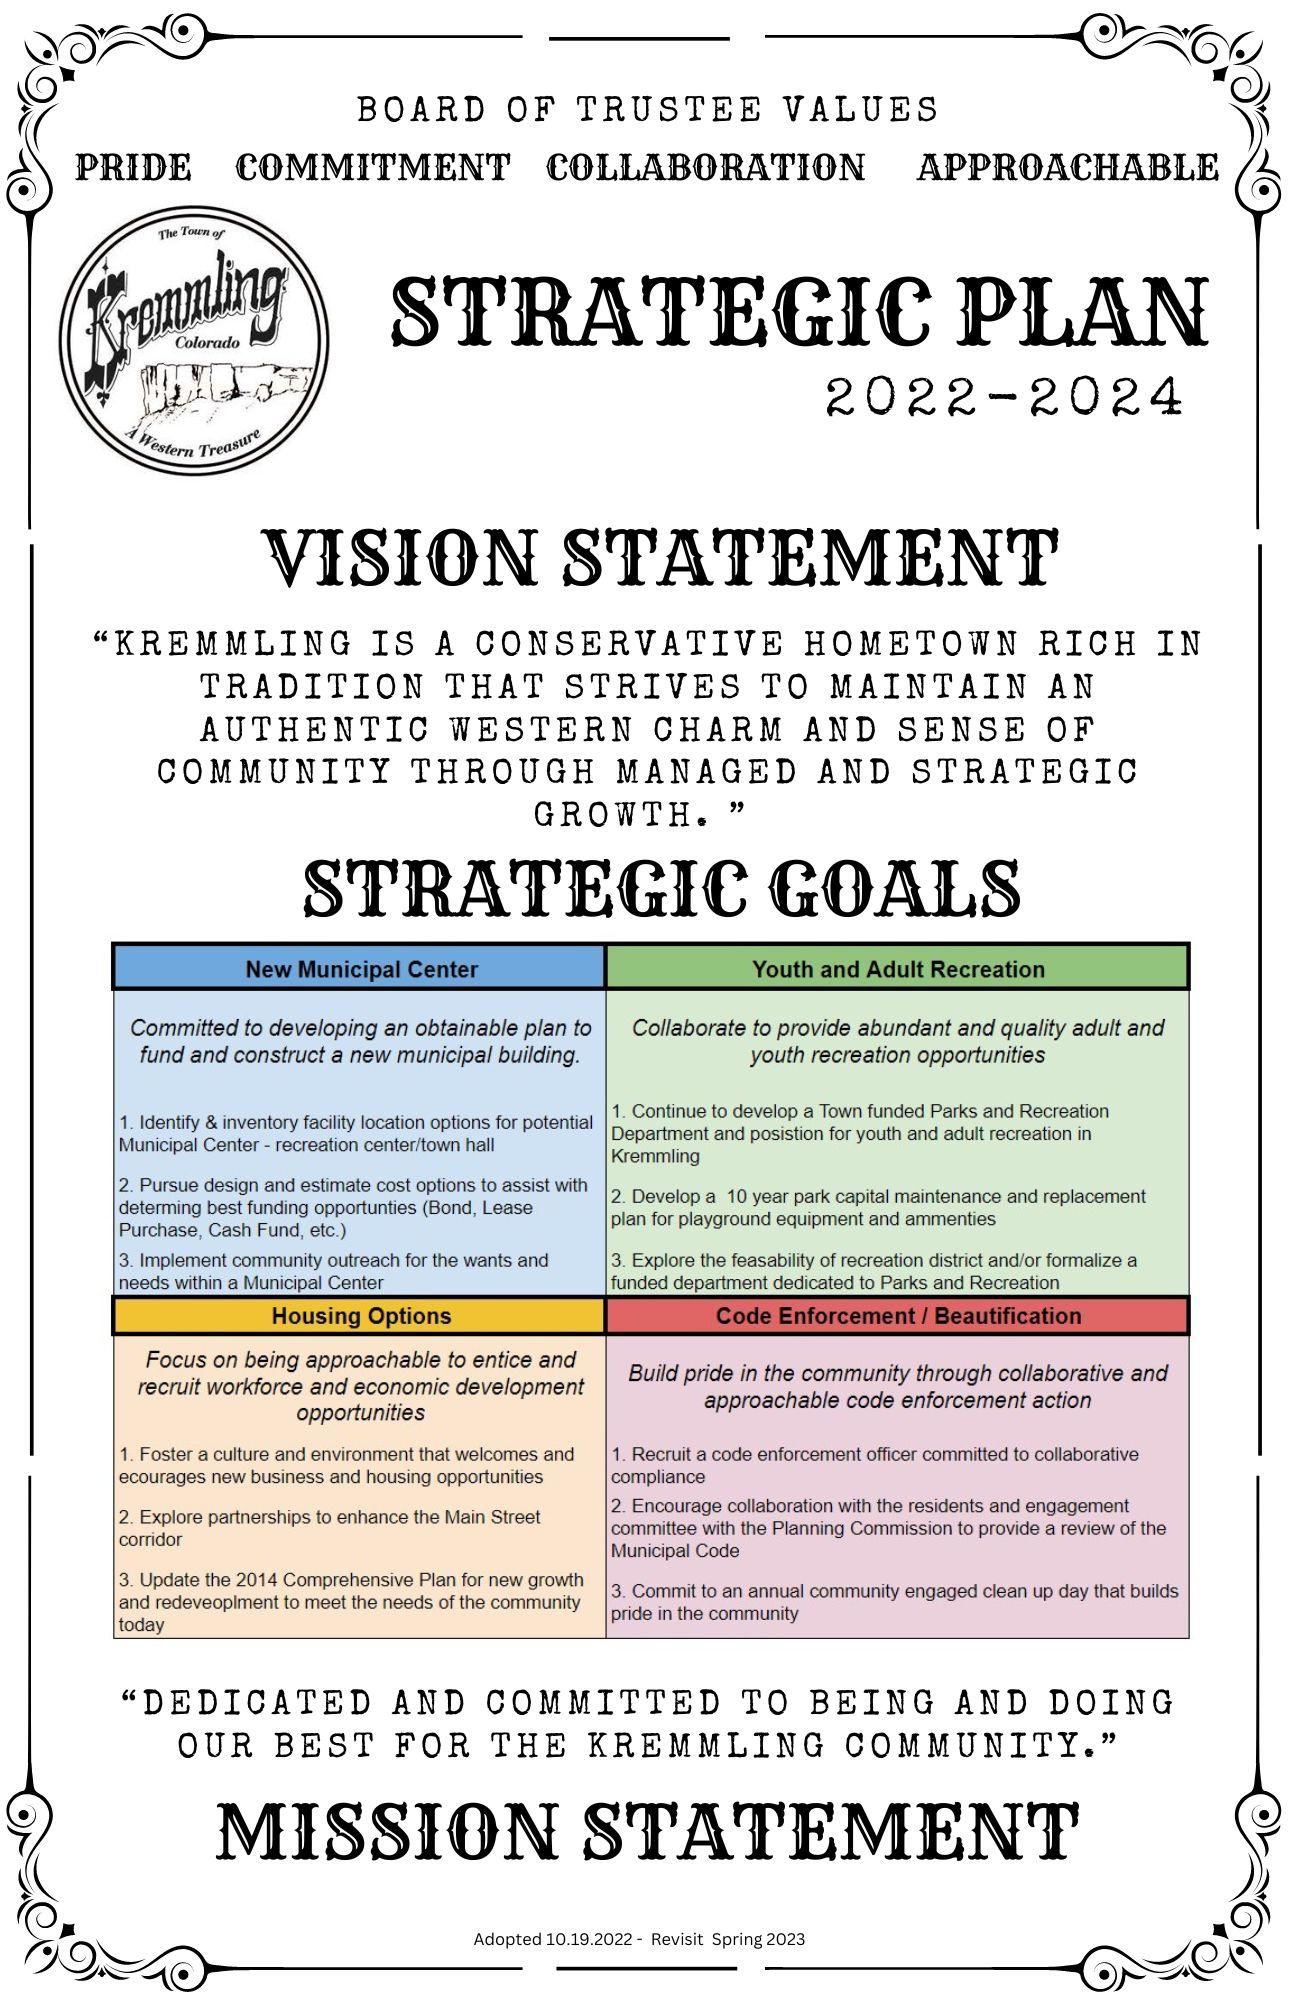 Financial Strategic Plan for 2022-2024